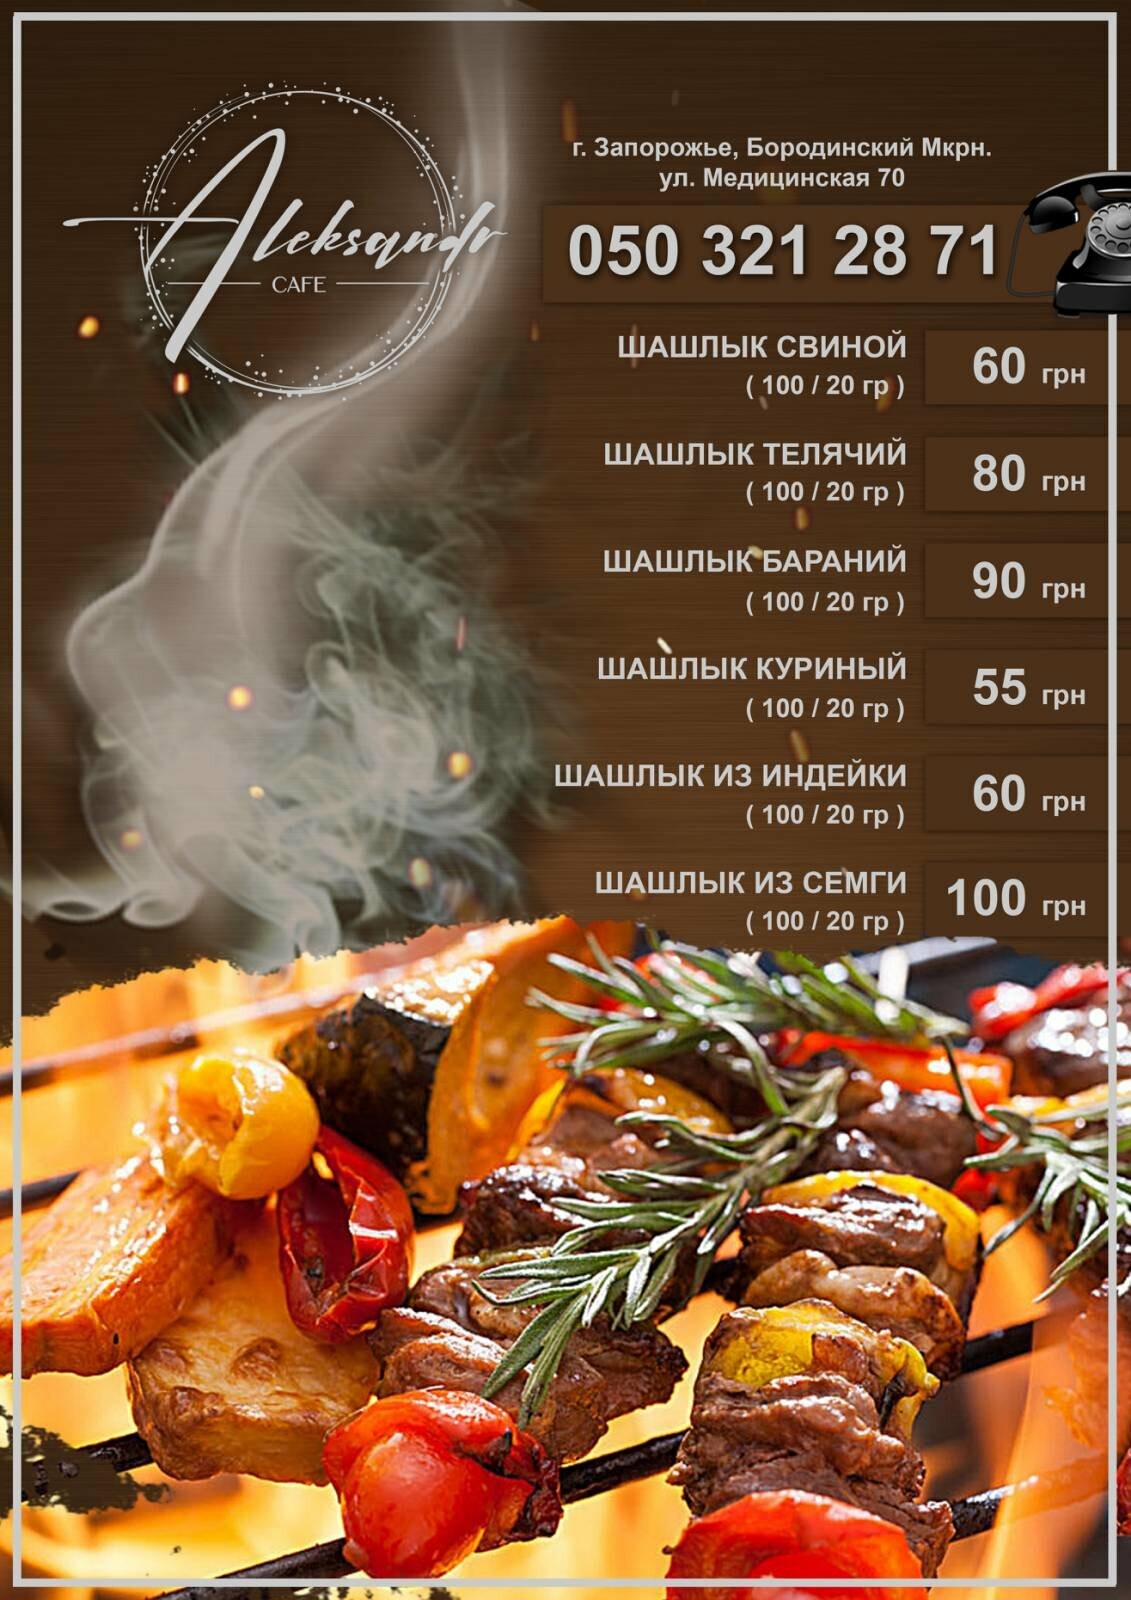 Доставка еды в Запорожье кафе Александр, фото-10